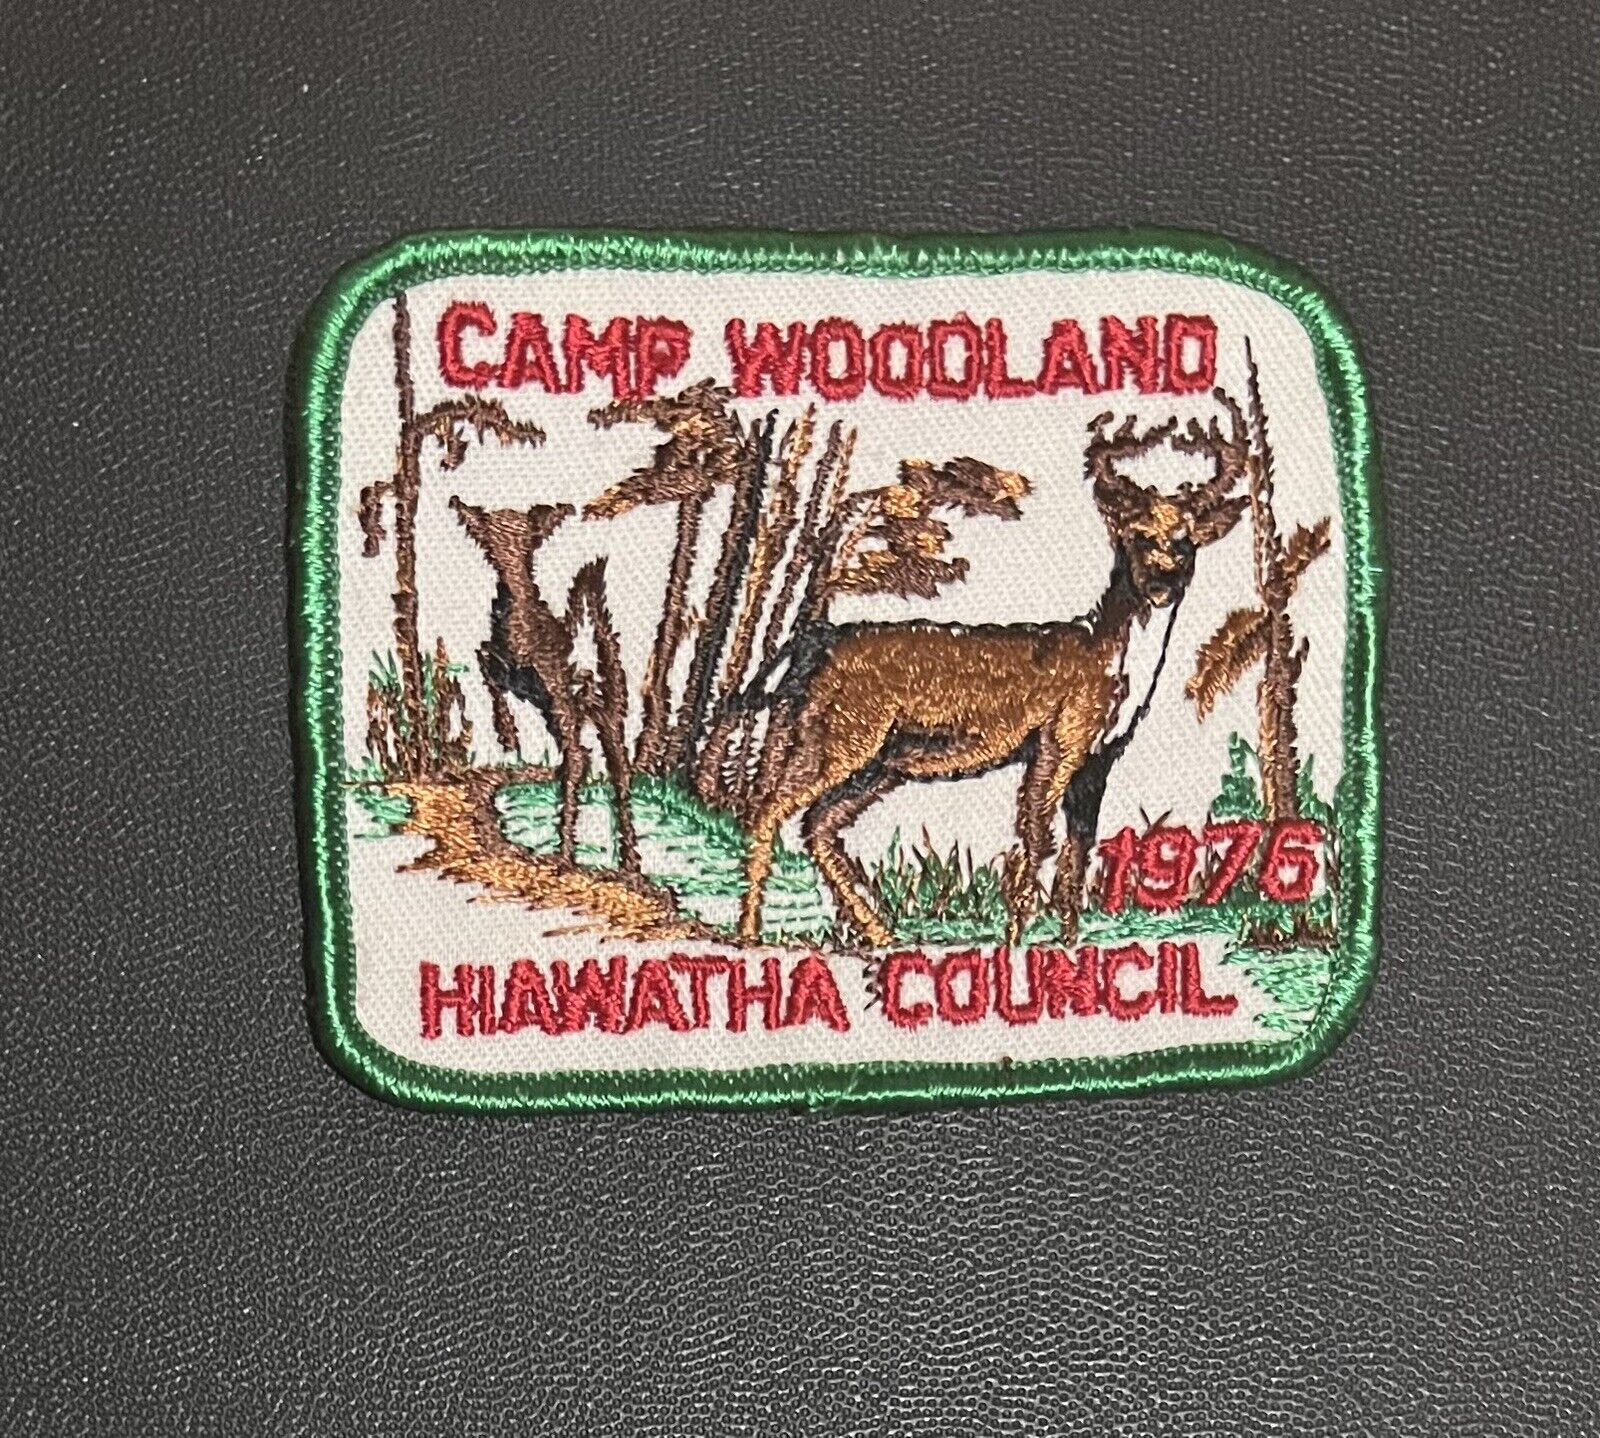 Camp Woodland 1976 Hiawatha Council